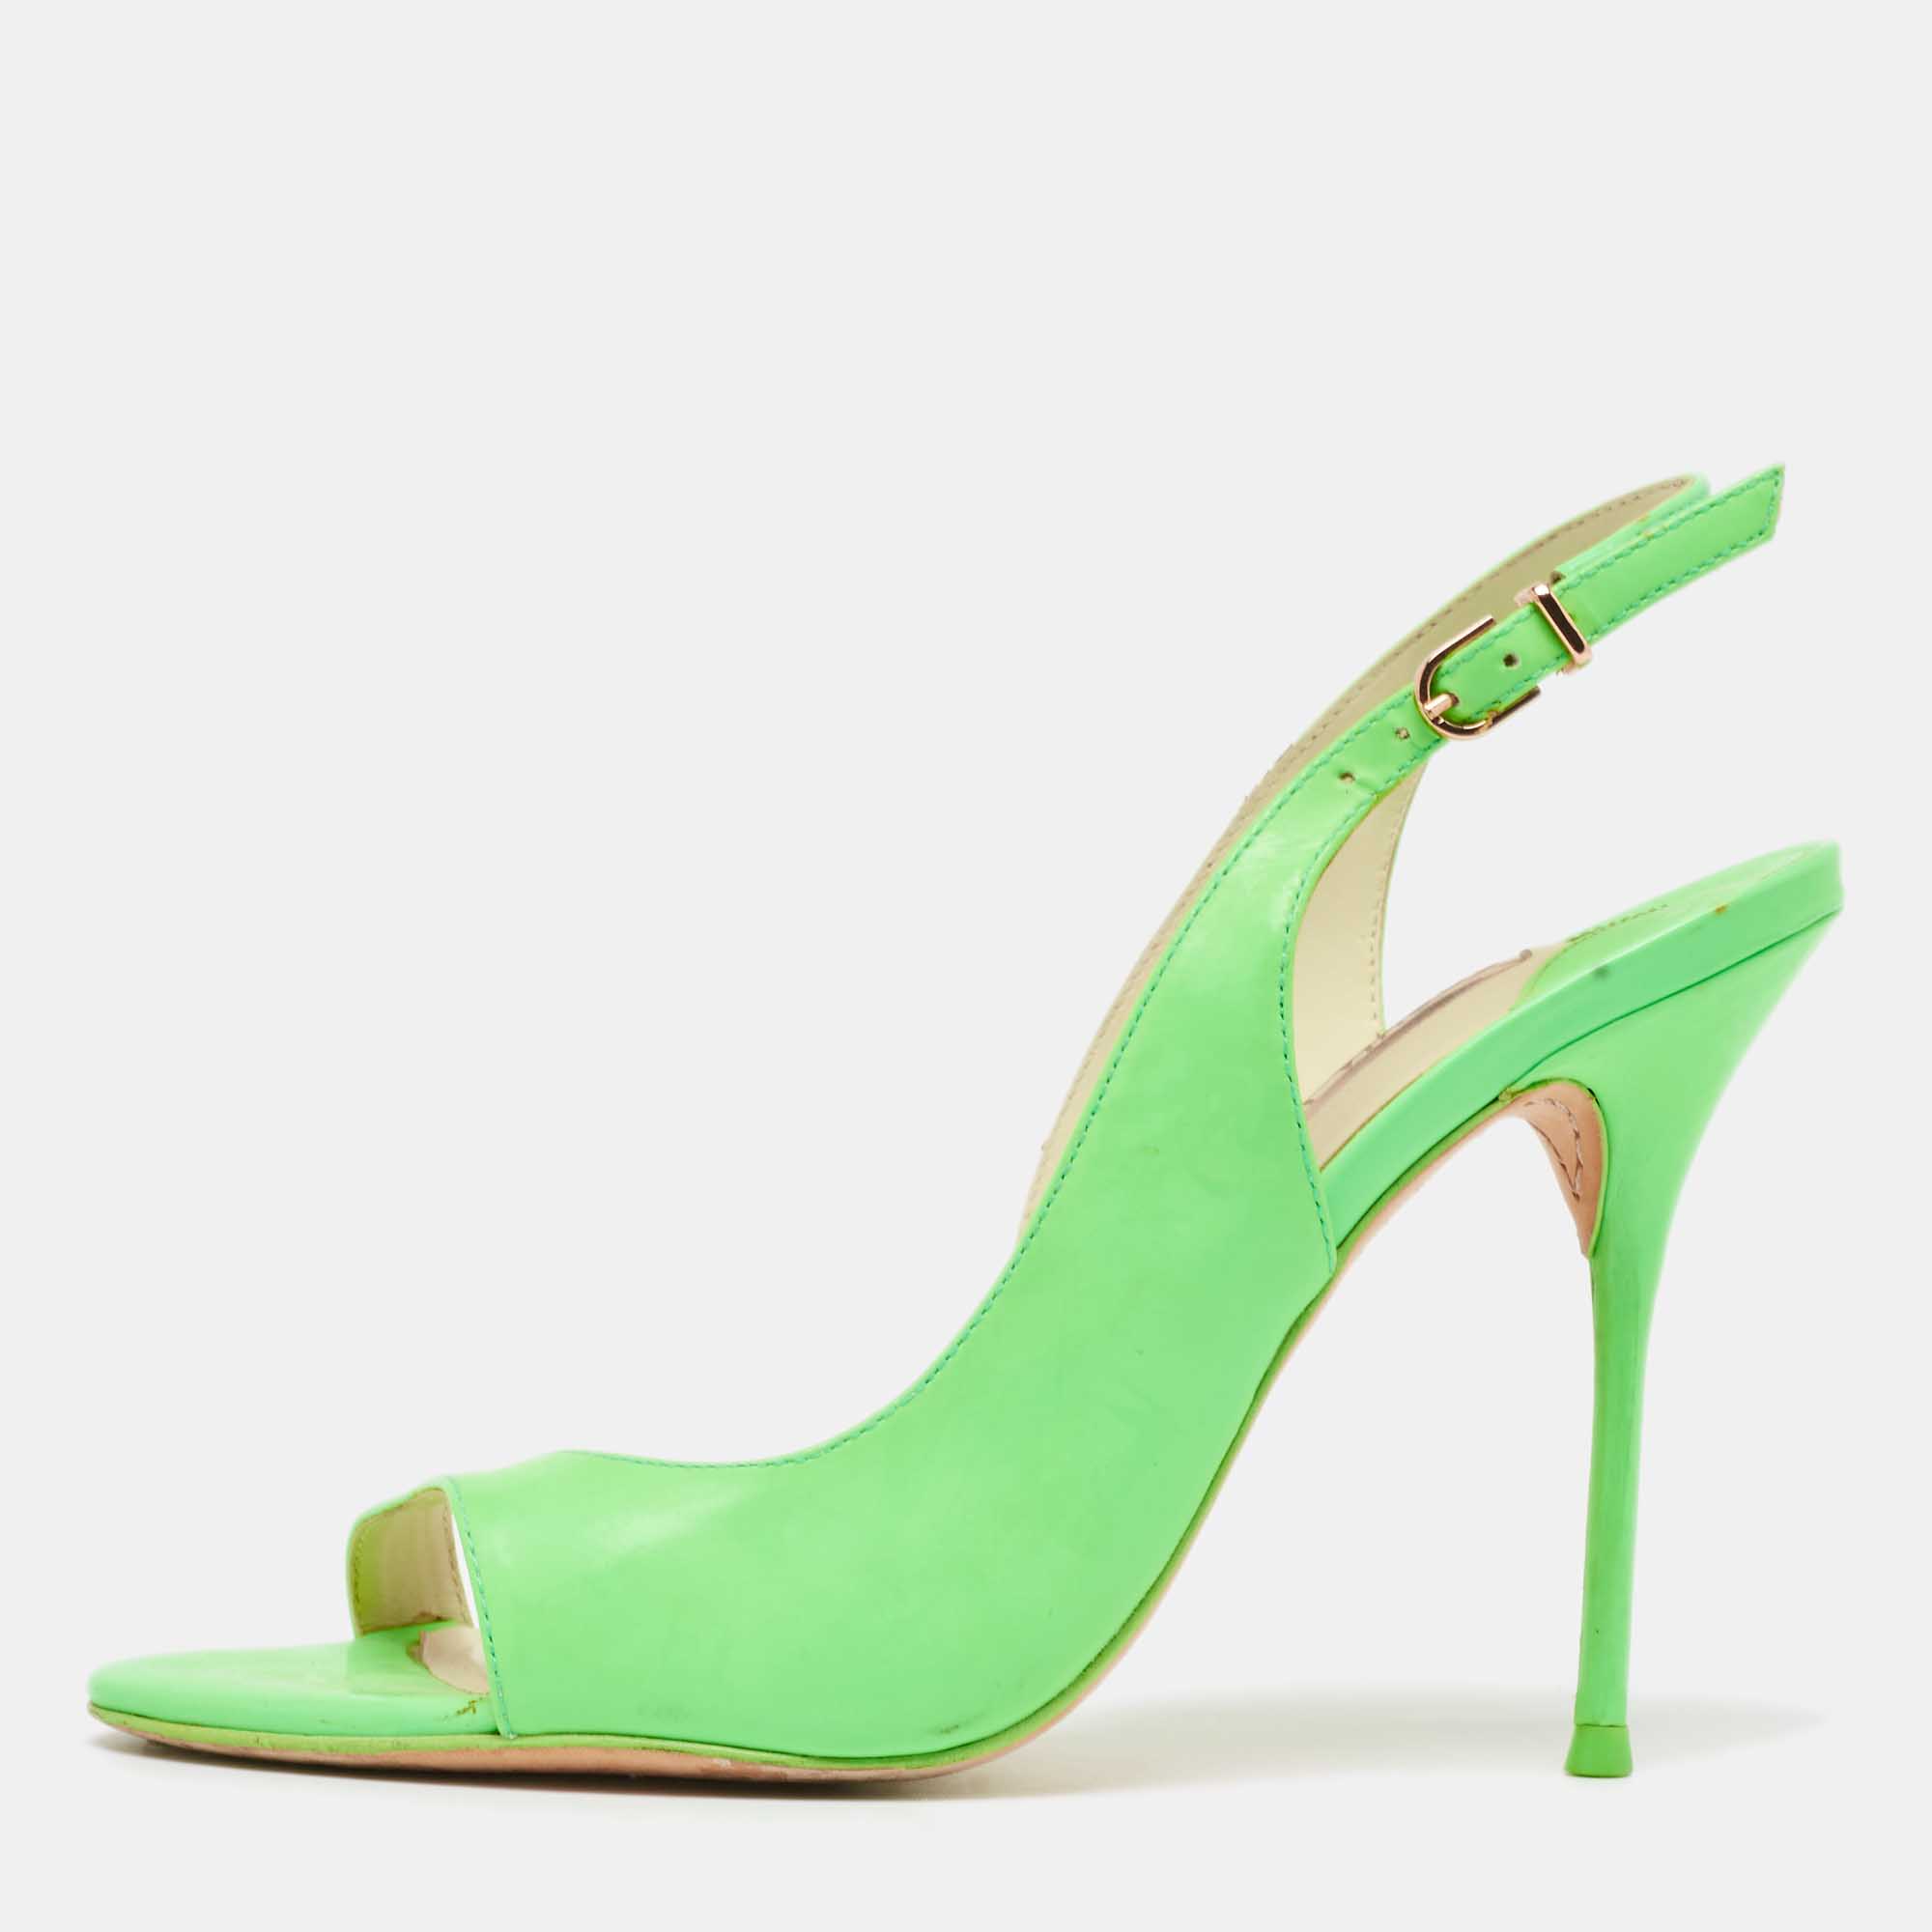 Sophia webster neon green leather slingback d'orsay sandals size 39